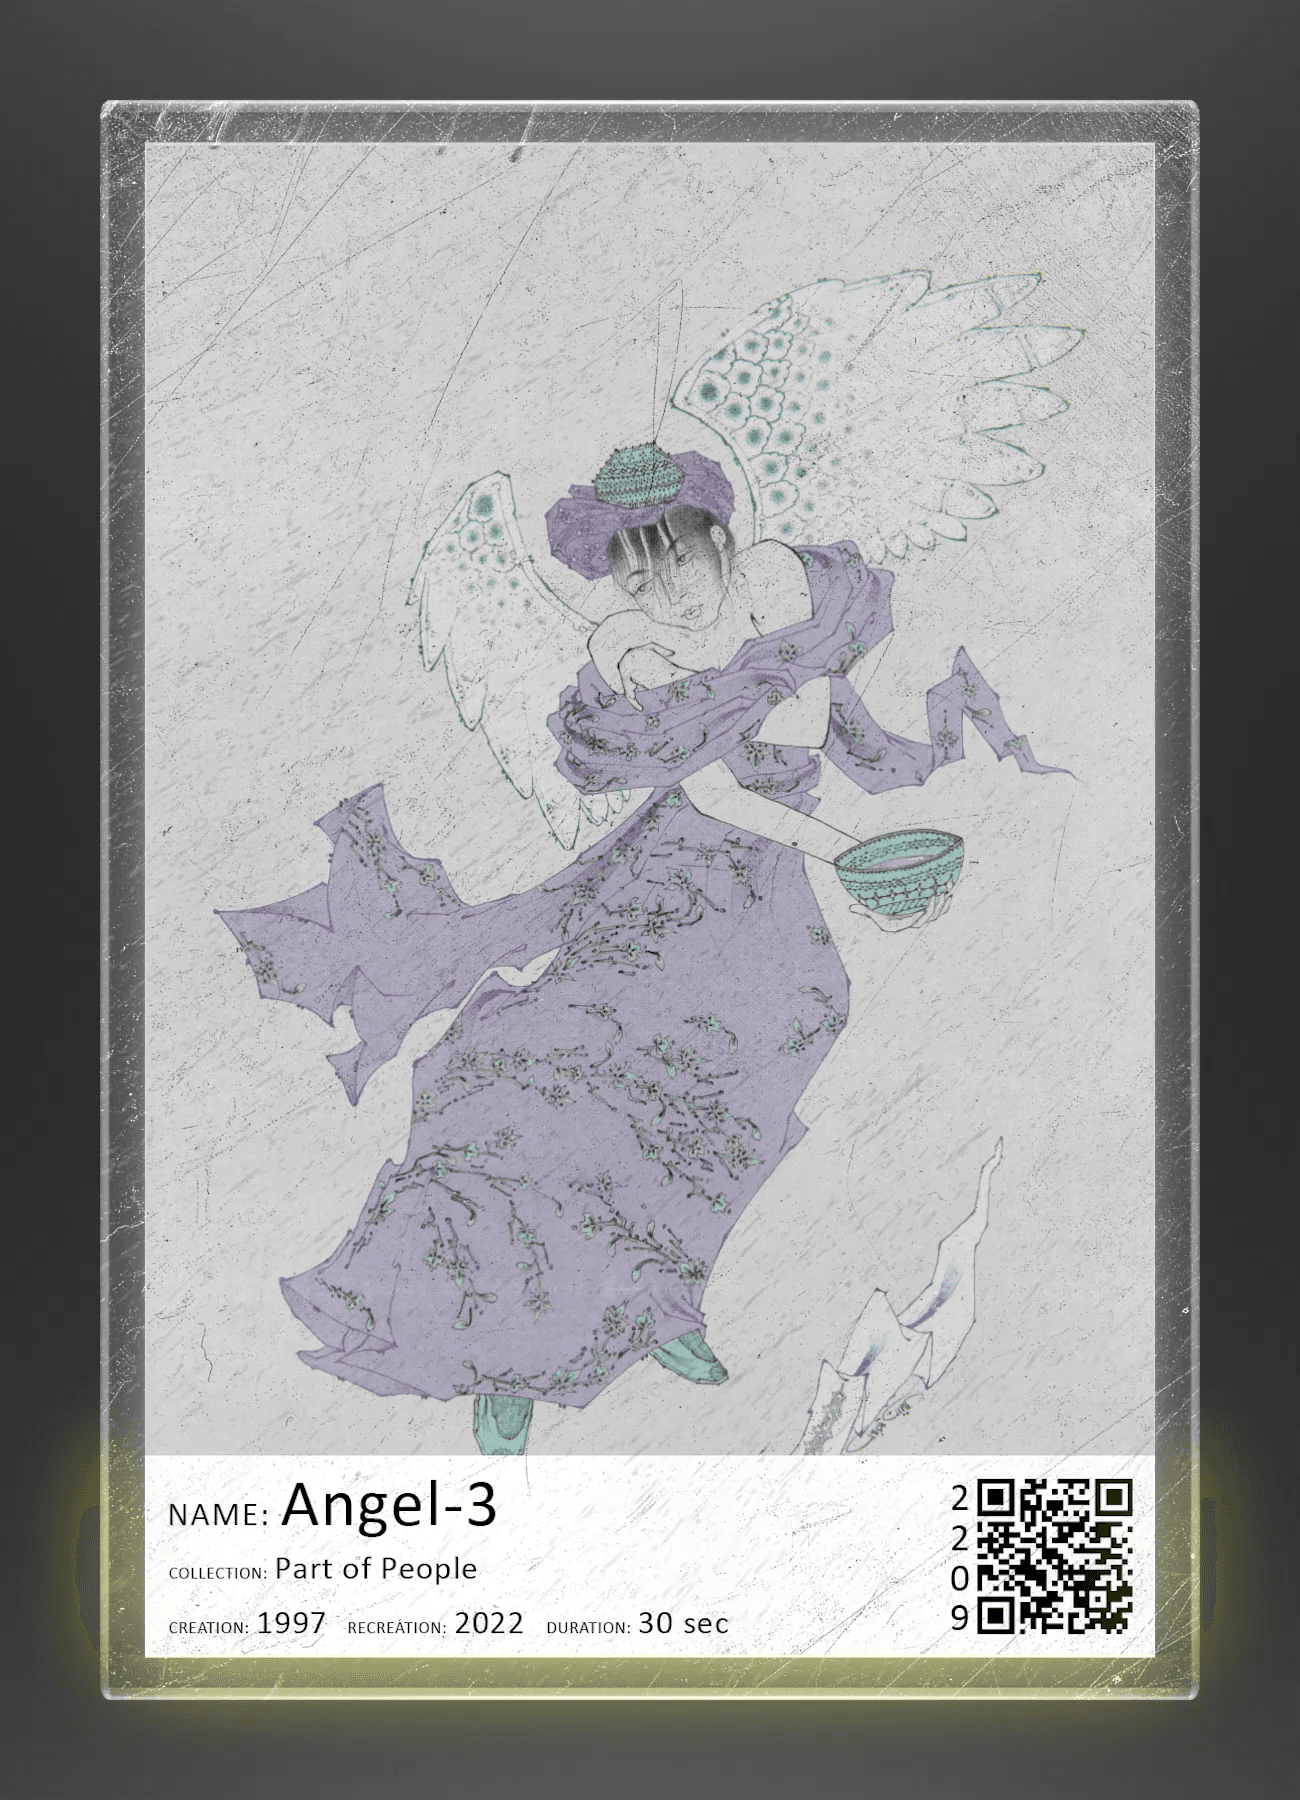 Angel-3